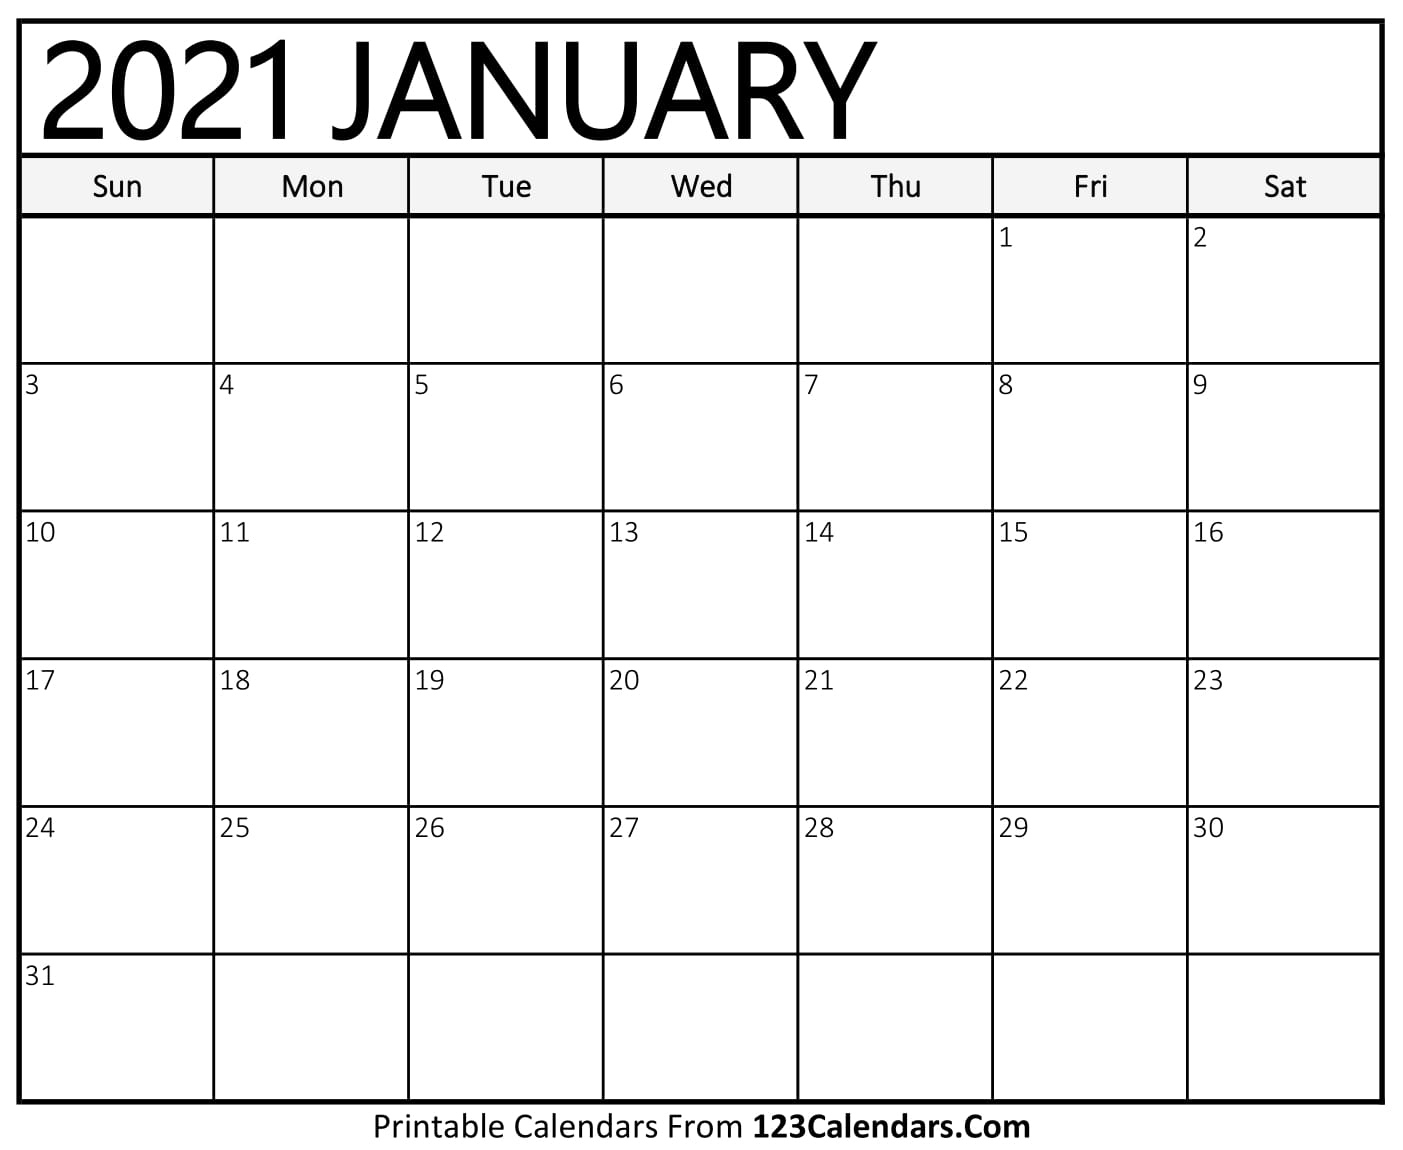 2021 Printable Calendar | 123Calendars 2021 Lined Monthly Calendar Printable